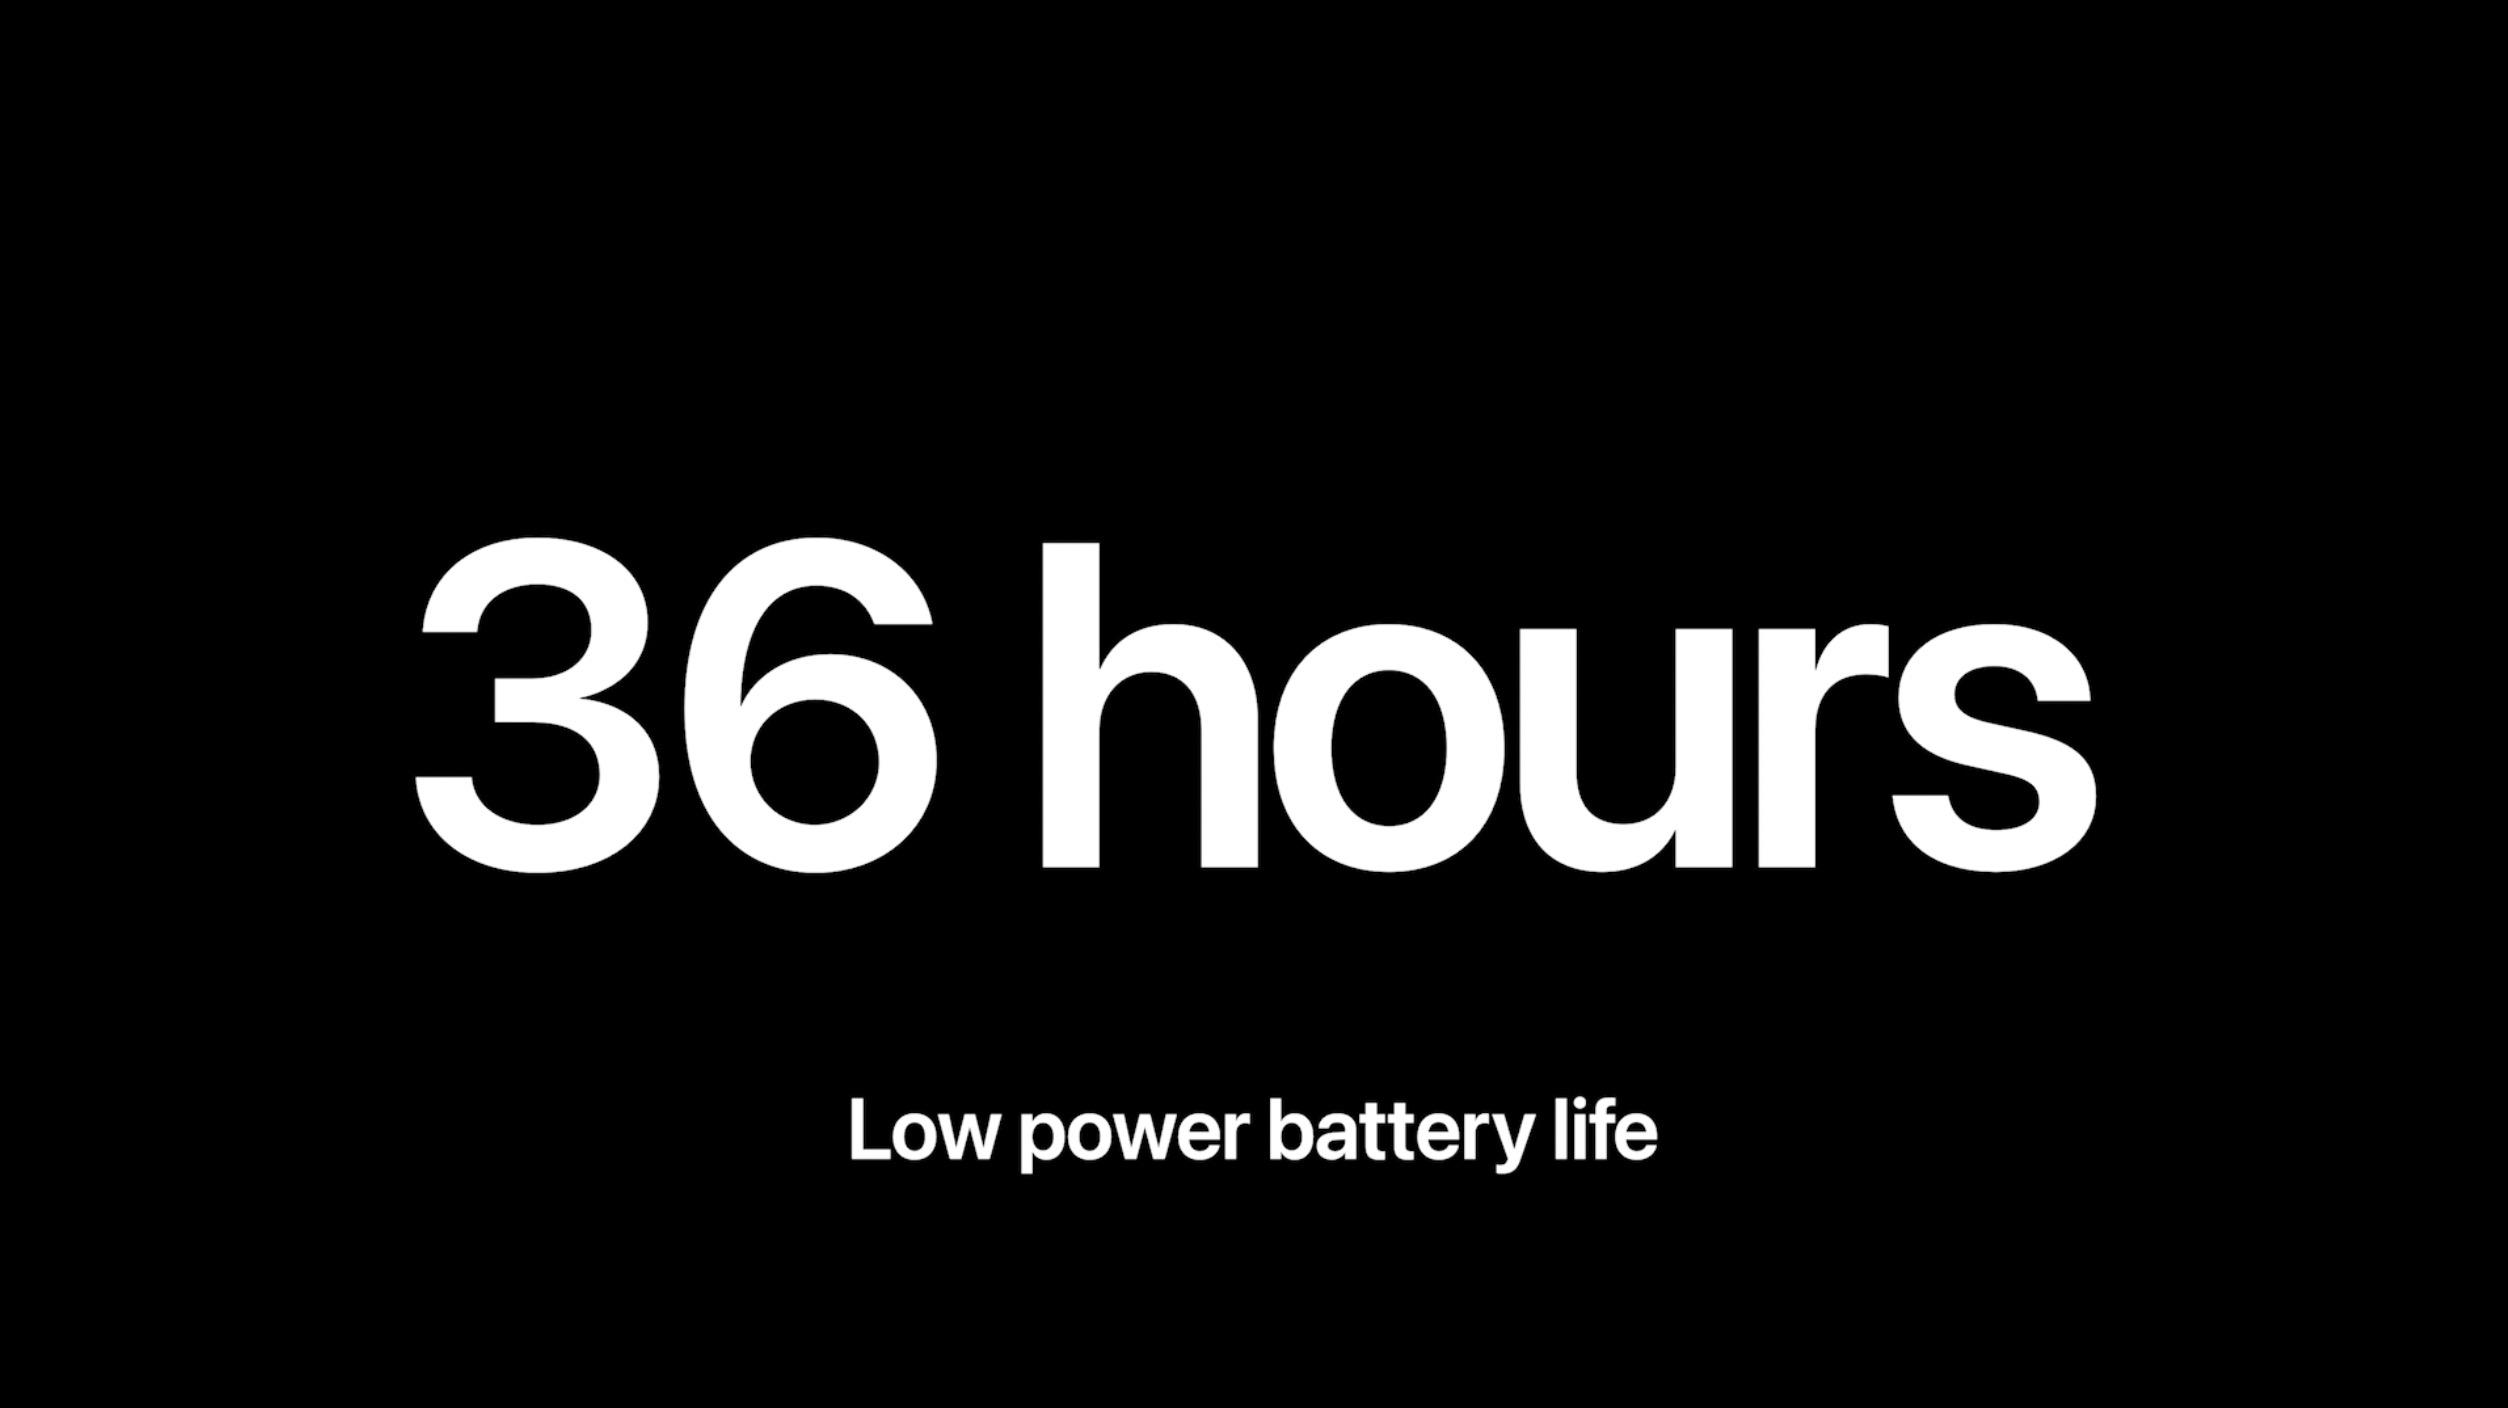 Срок службы батареи Apple Watch от Series 8 до Series 4 увеличен благодаря режиму энергосбережения